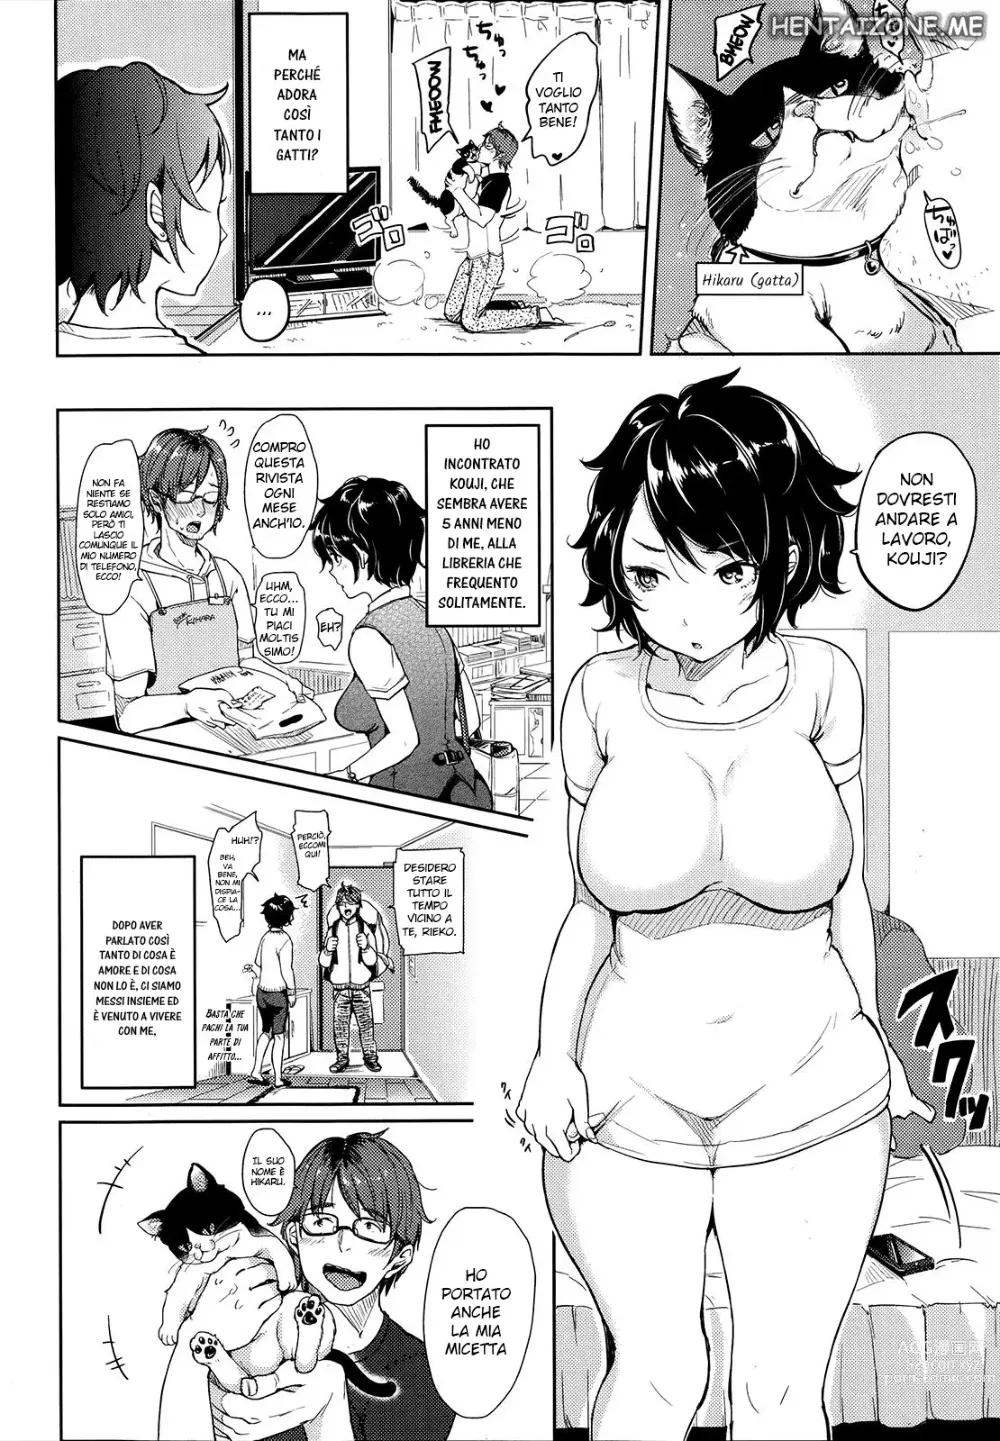 Page 2 of manga Gioca come se Fossi una Gattina